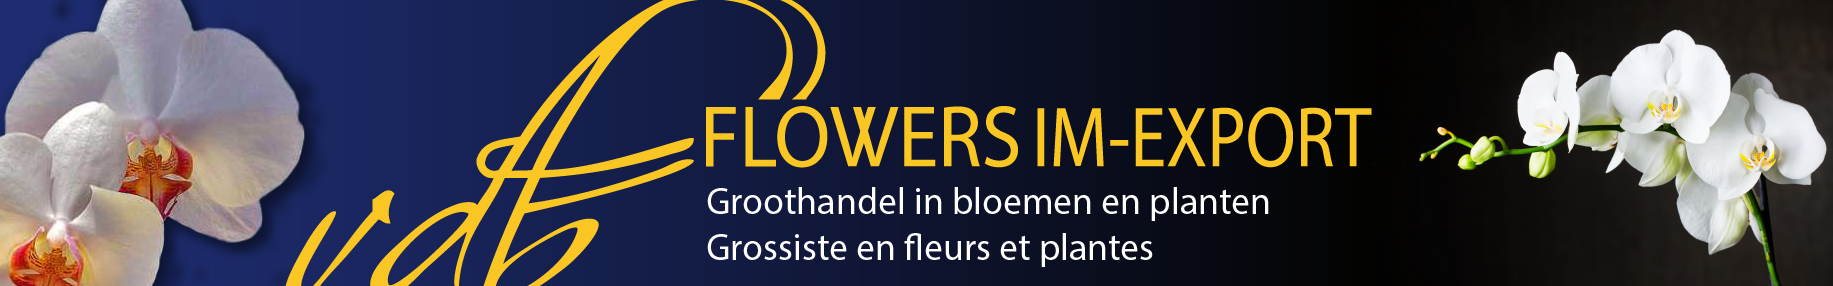 VDB Flowers Banner